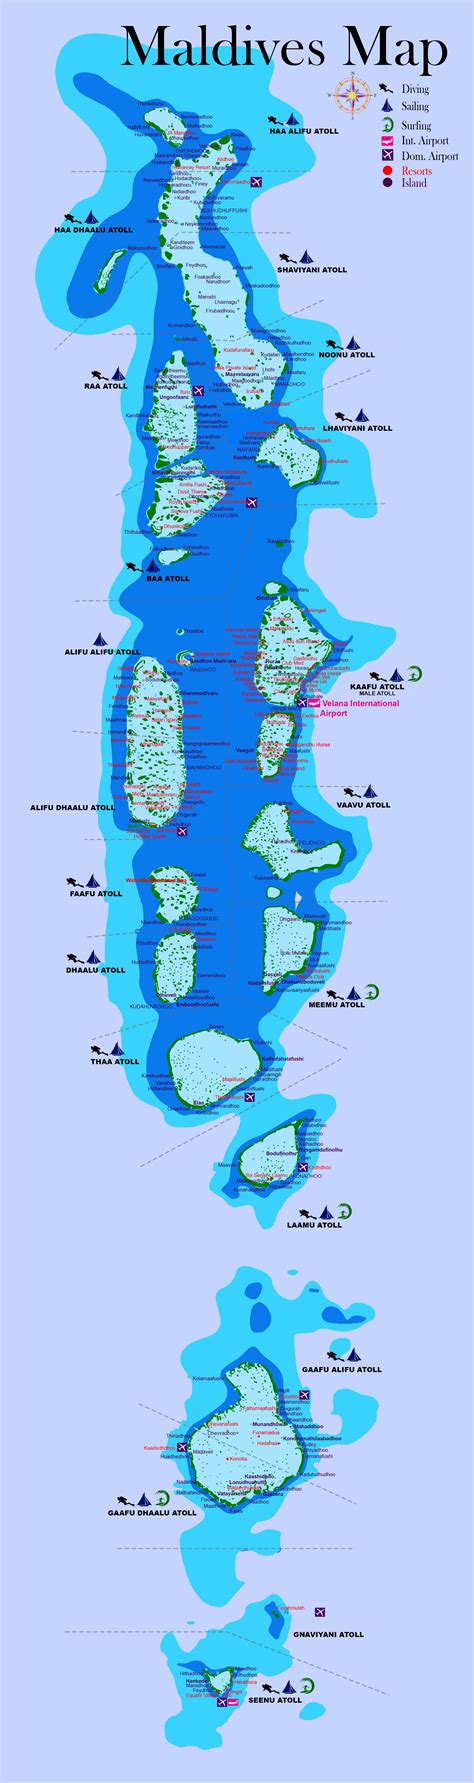 Maldives Map Full Maldives Island Maldives Travel Guide Maldives Travel